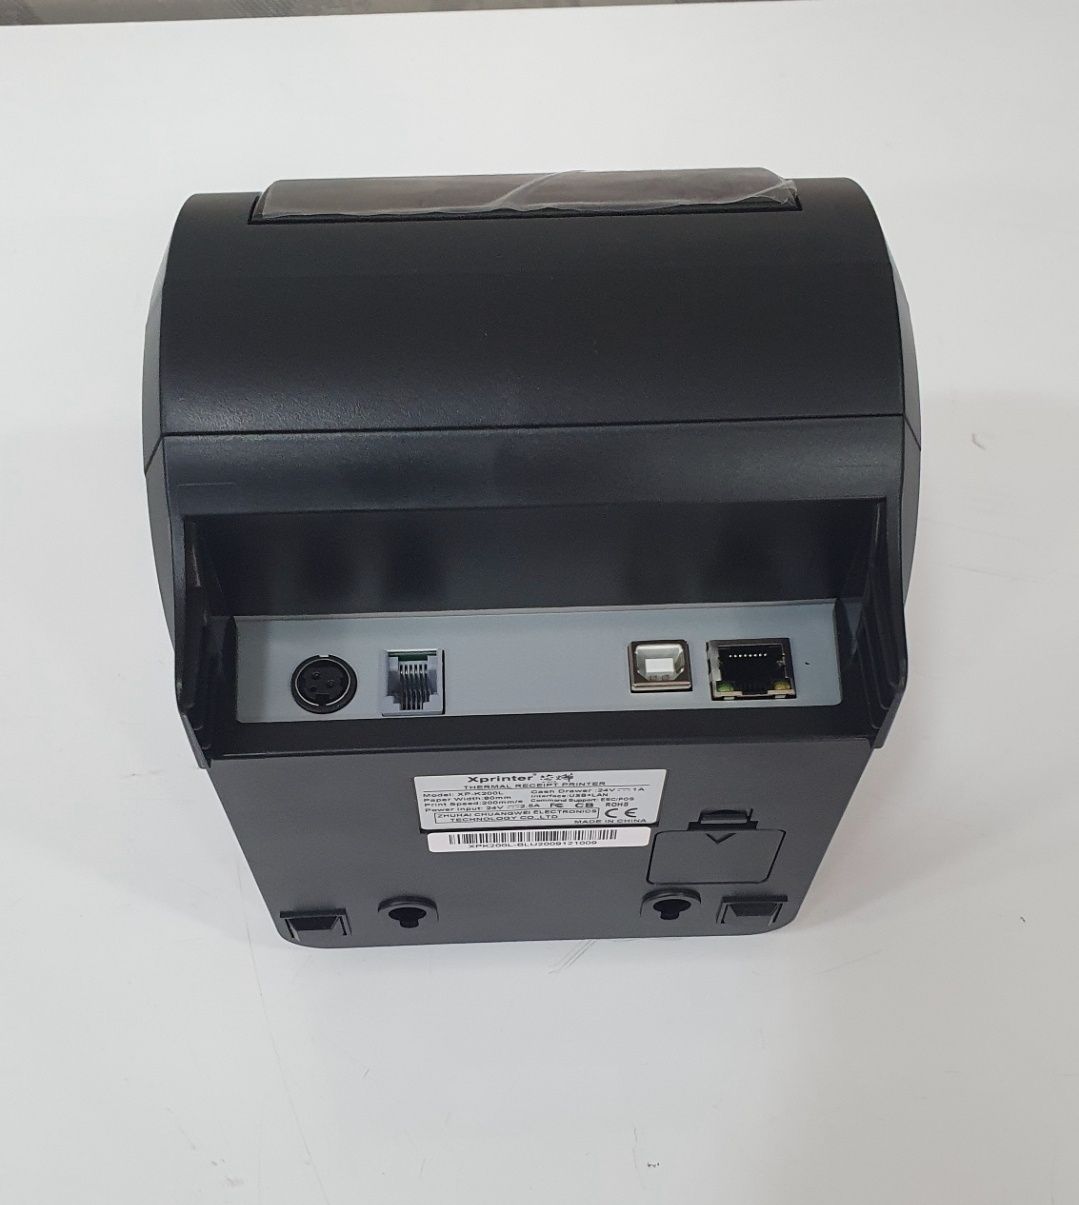 Xprinter pos80 термопринтер 80 r-keeper jowi posbank чек принтер